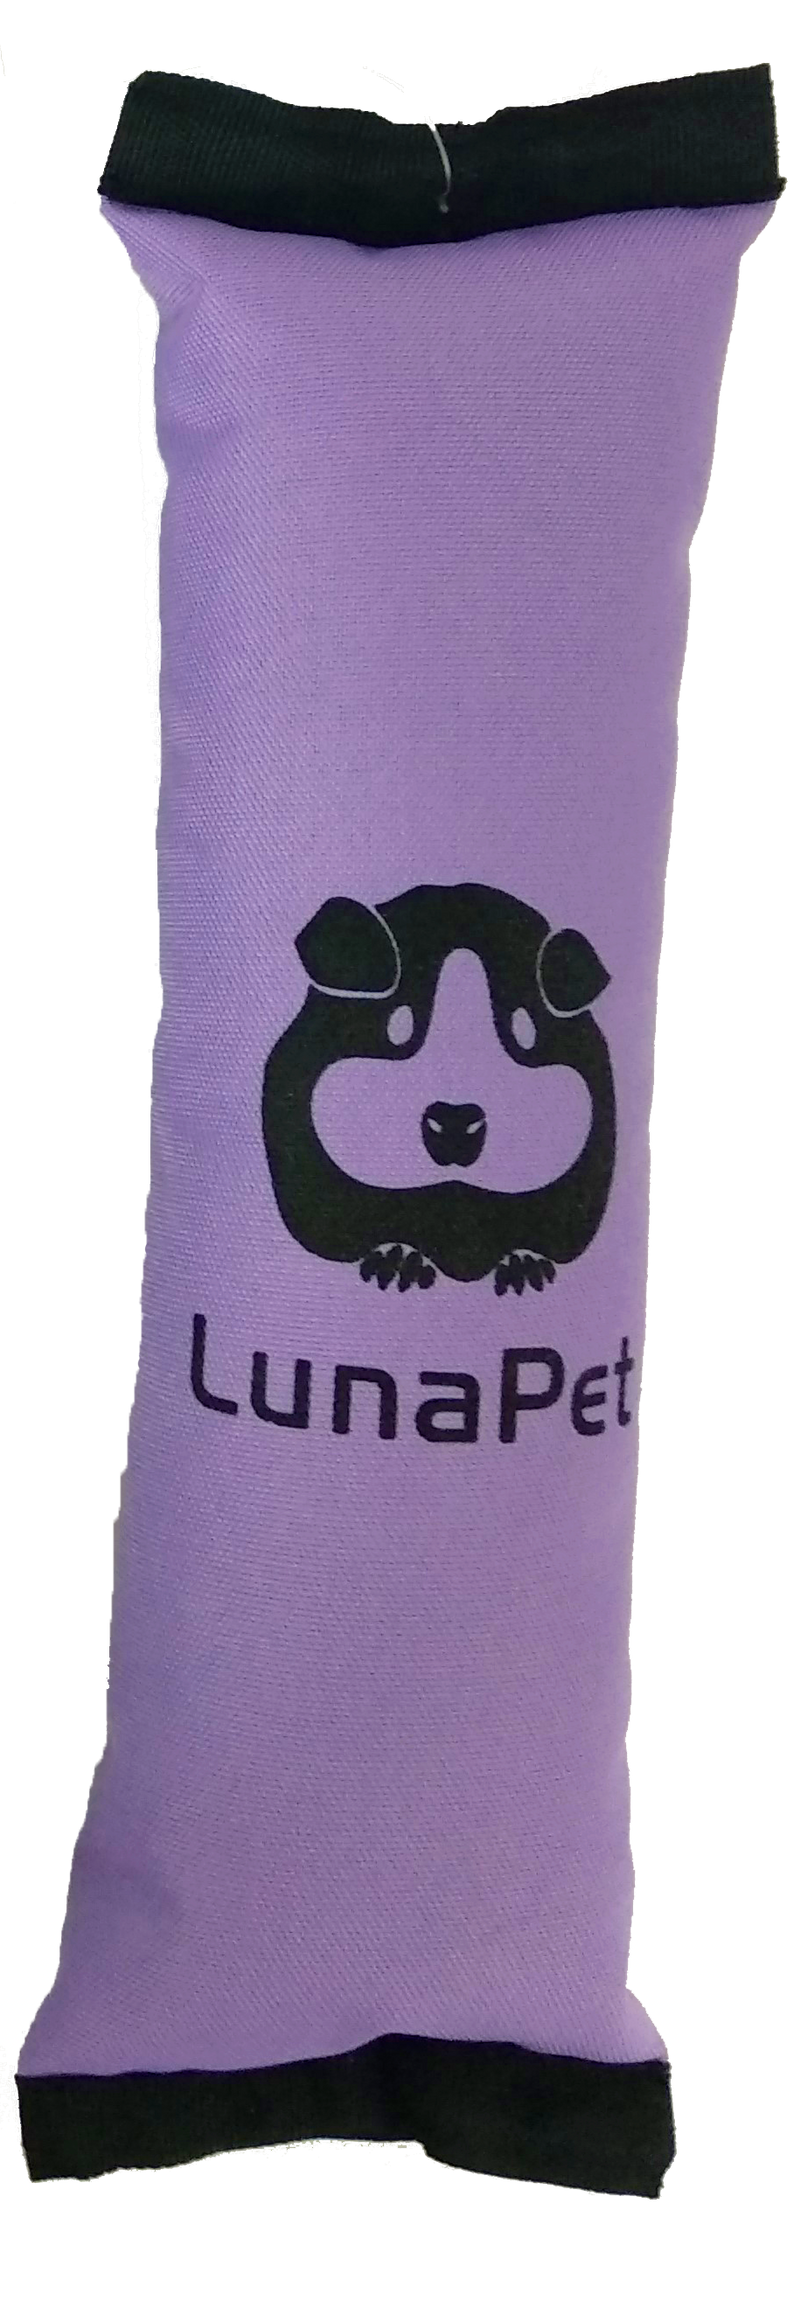 Luna Pet משחקים לכלב צעצוע Luna pet - נשכן פאפי רול עמיד במיוחד לכלבים